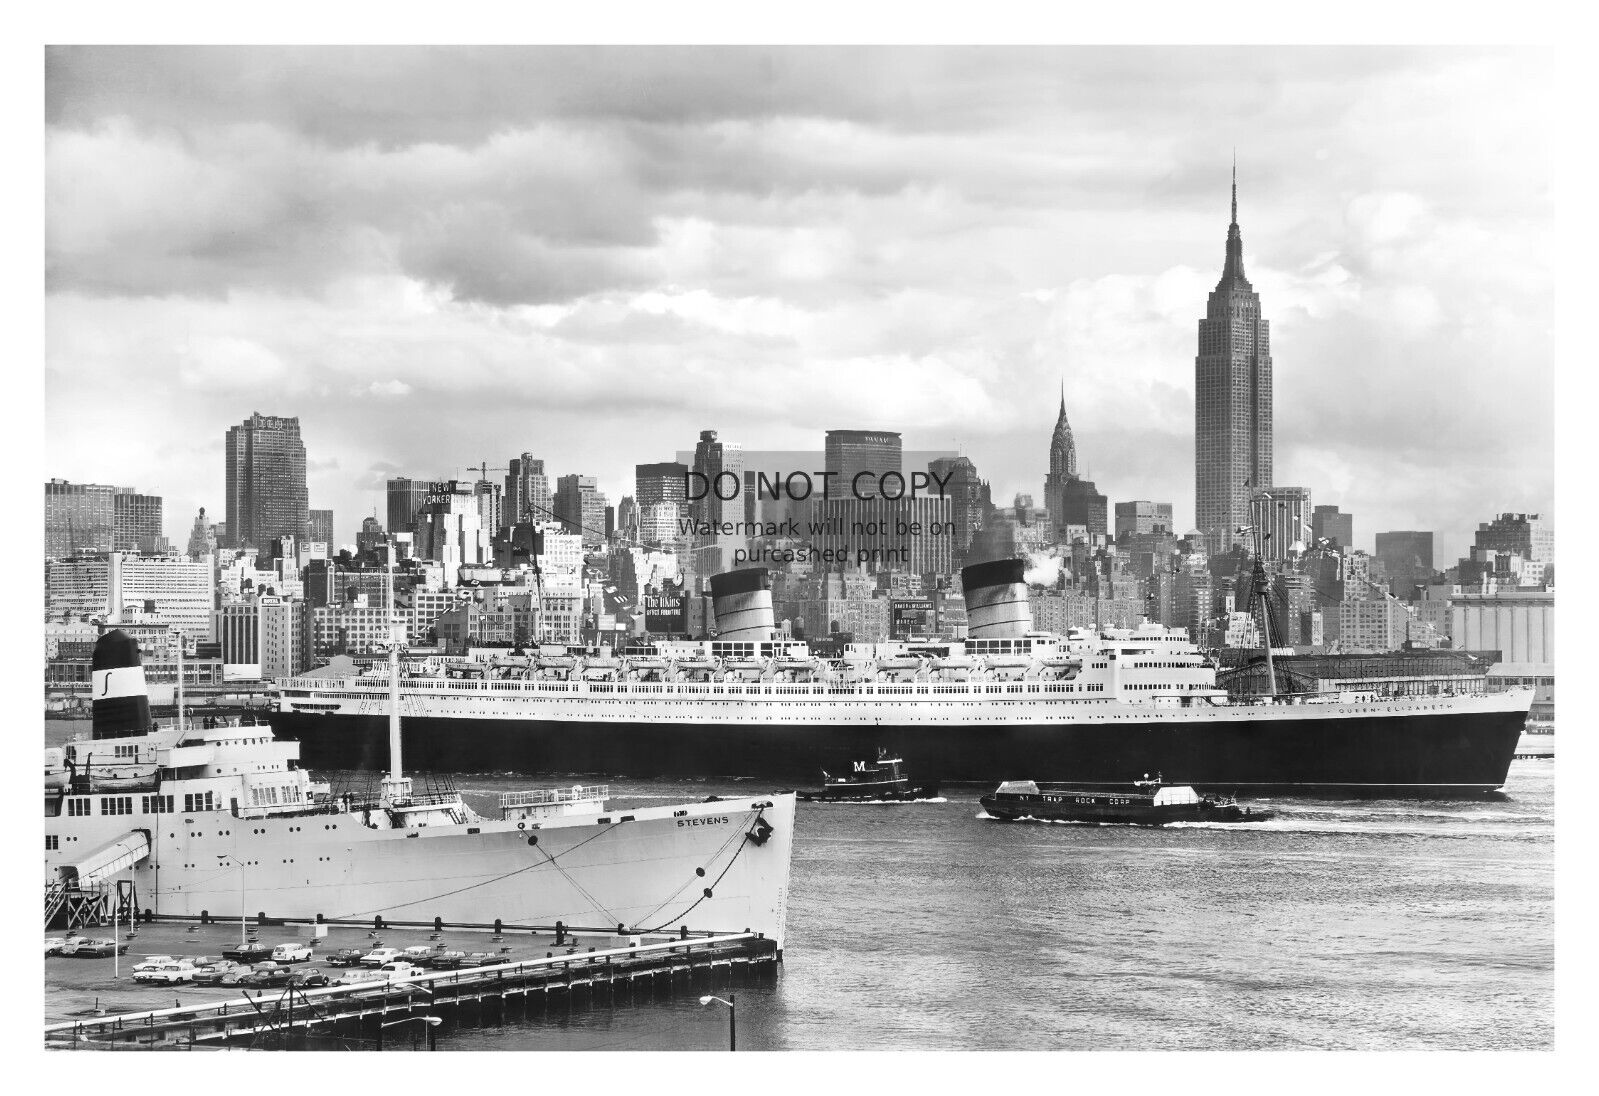 RMS QUEEN ELIZABETH WHITE STAR CRUISESHIP ON HER LAST VOYAGE NEW YORK 4X6 PHOTO